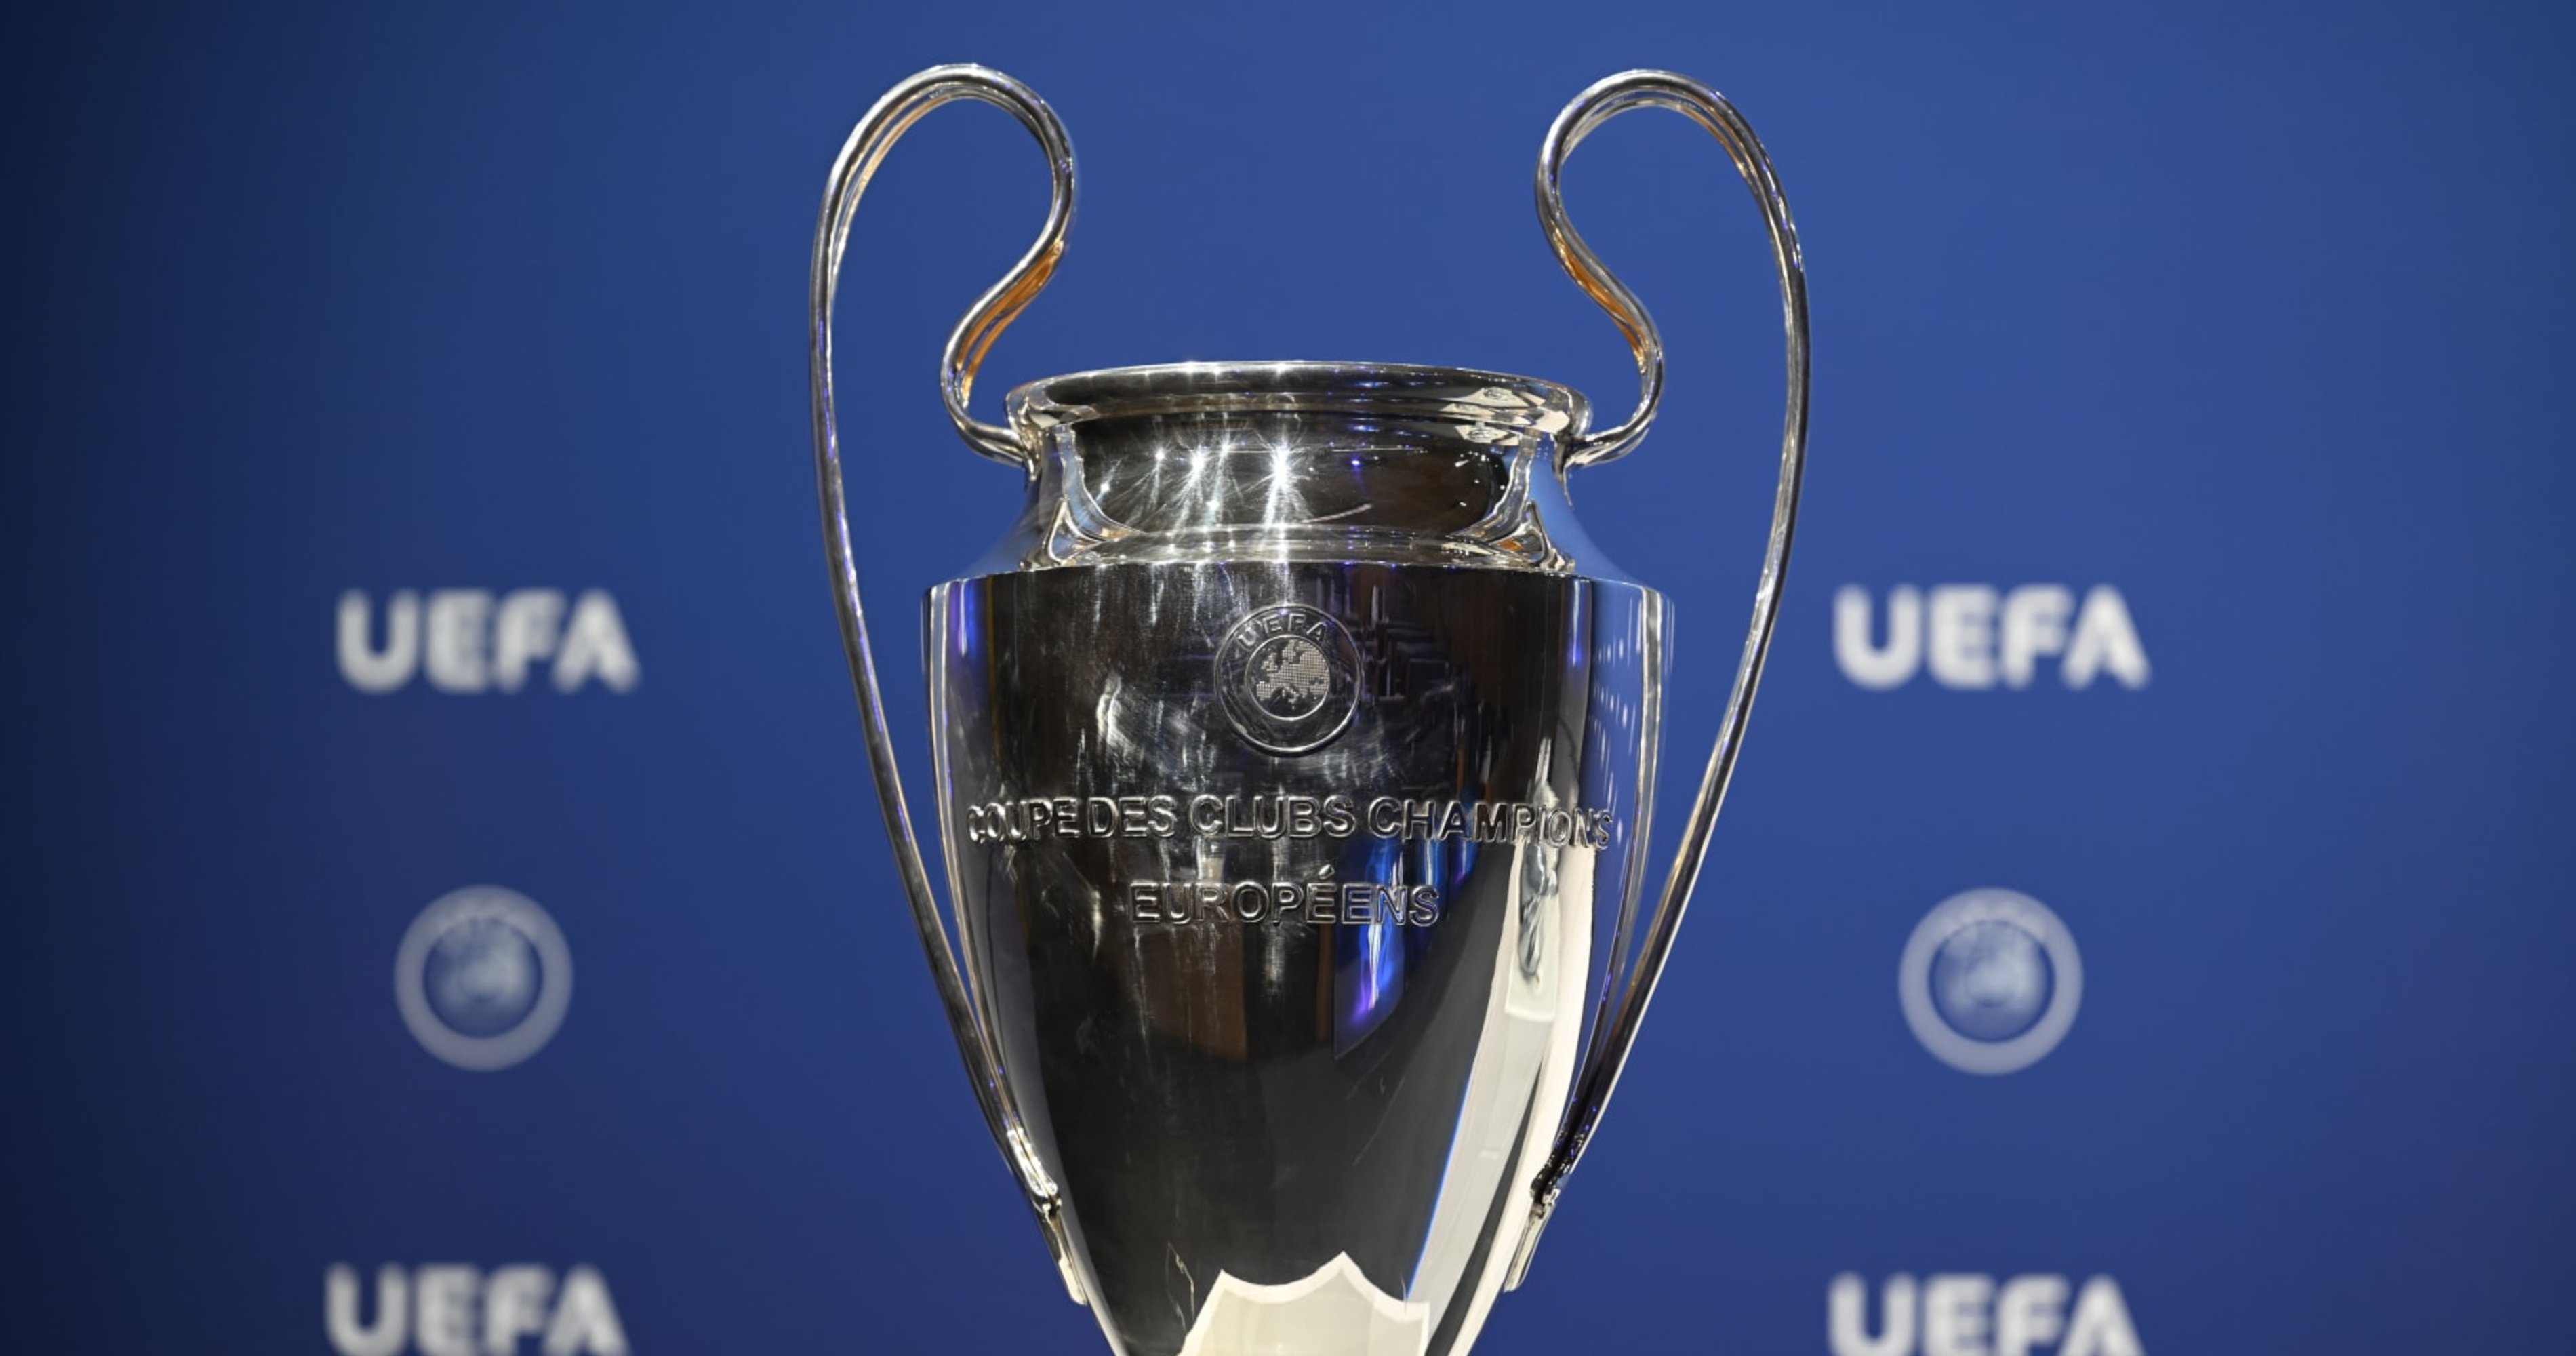 Ligue 1 drop down to 7th in UEFA's latest European League rankings